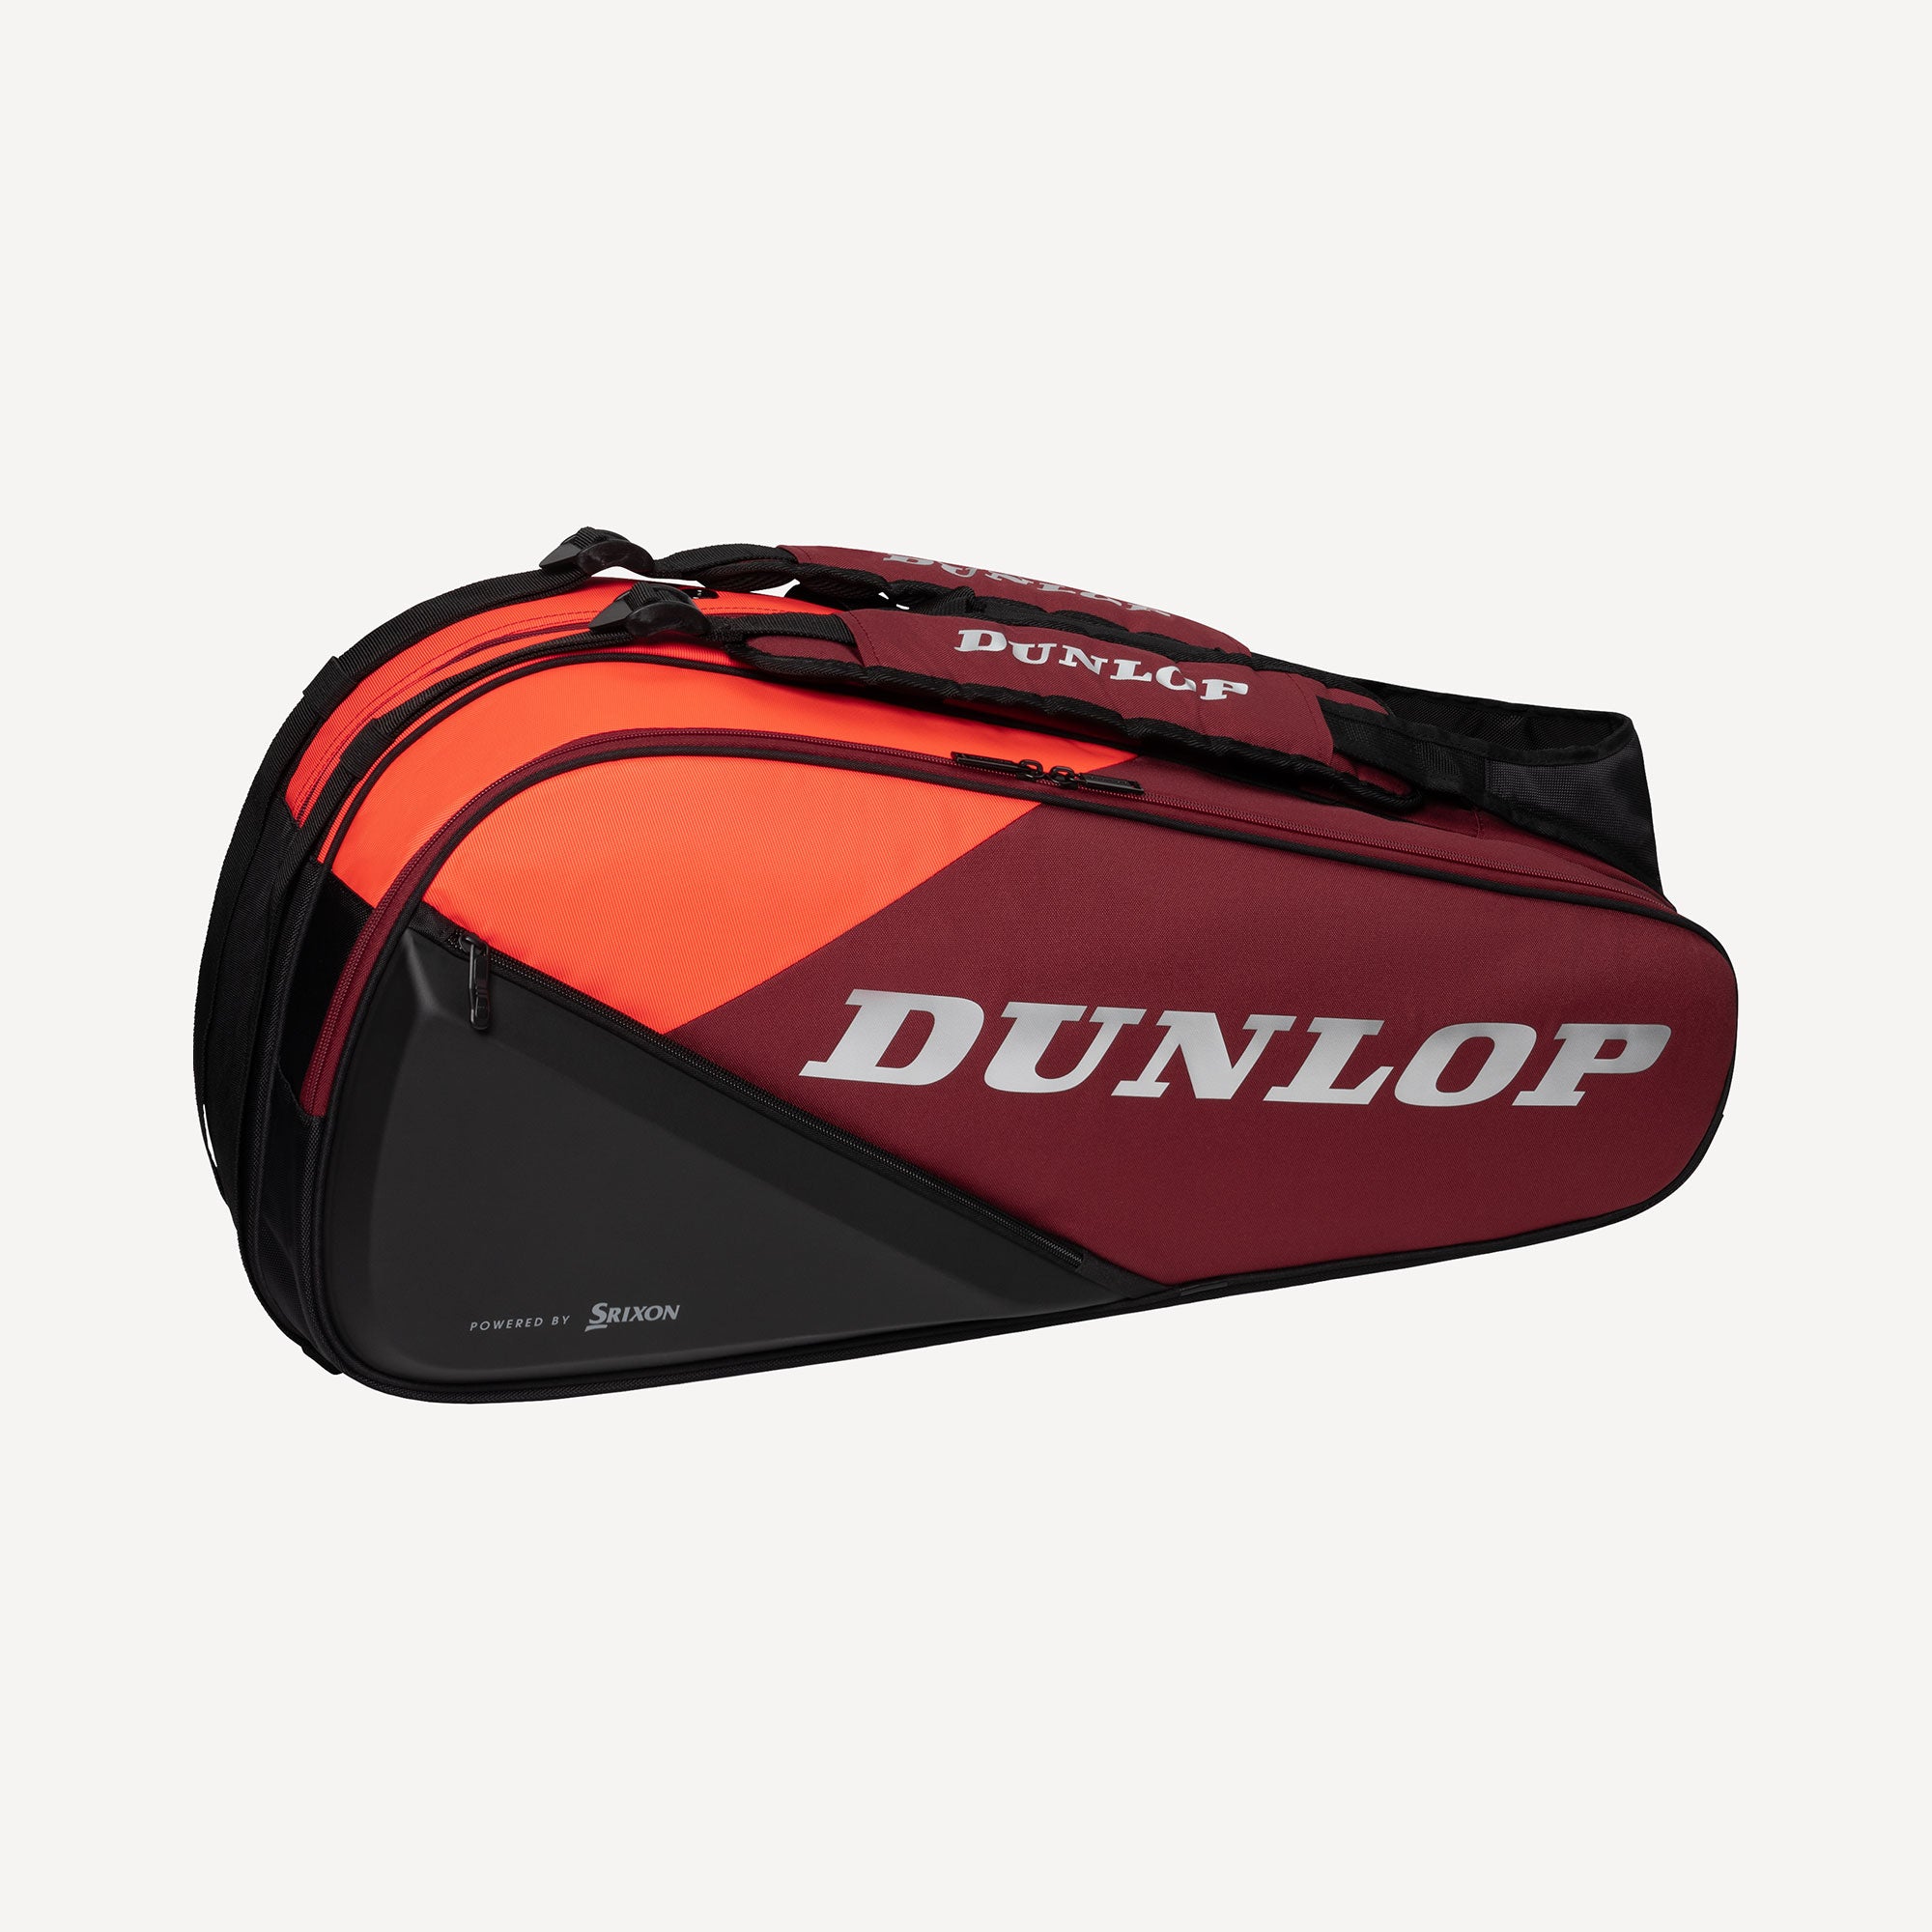 Dunlop CX Performance 8 Racket Tennis Bag - Red (1)